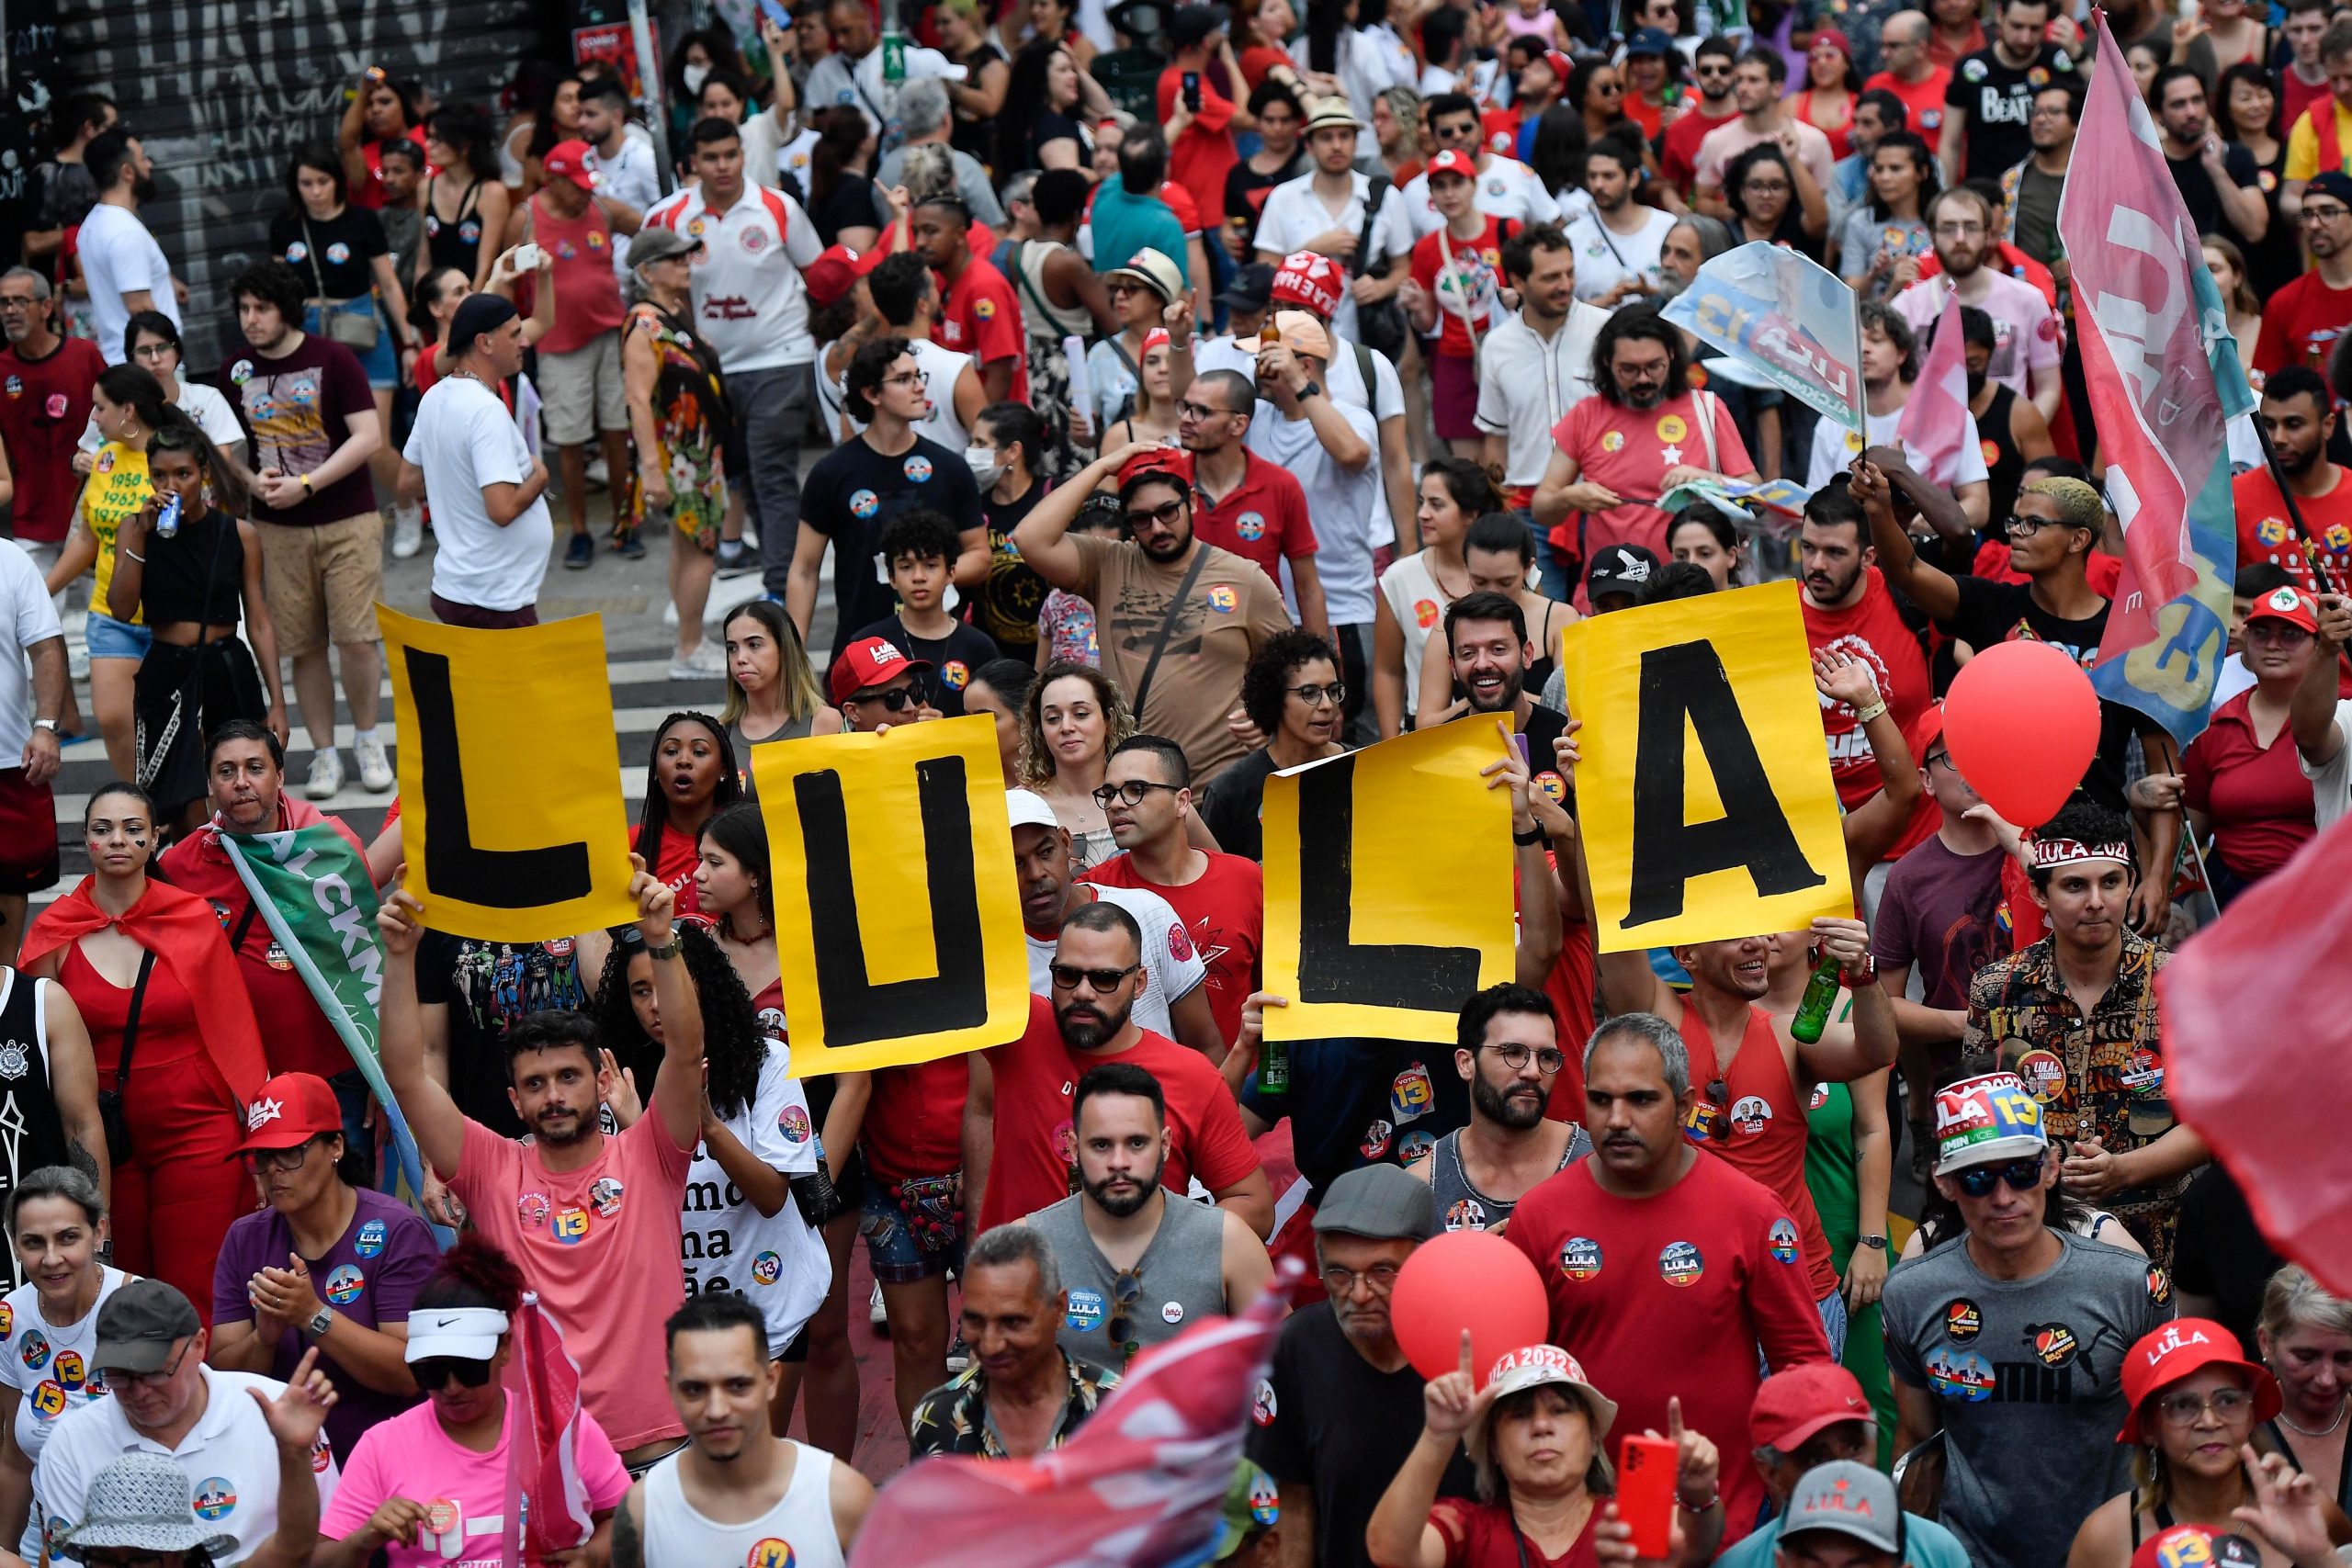 Leftist Lula da Silva beats incumbent far-right Jair Bolsonaro to become Brazil’s 39th president